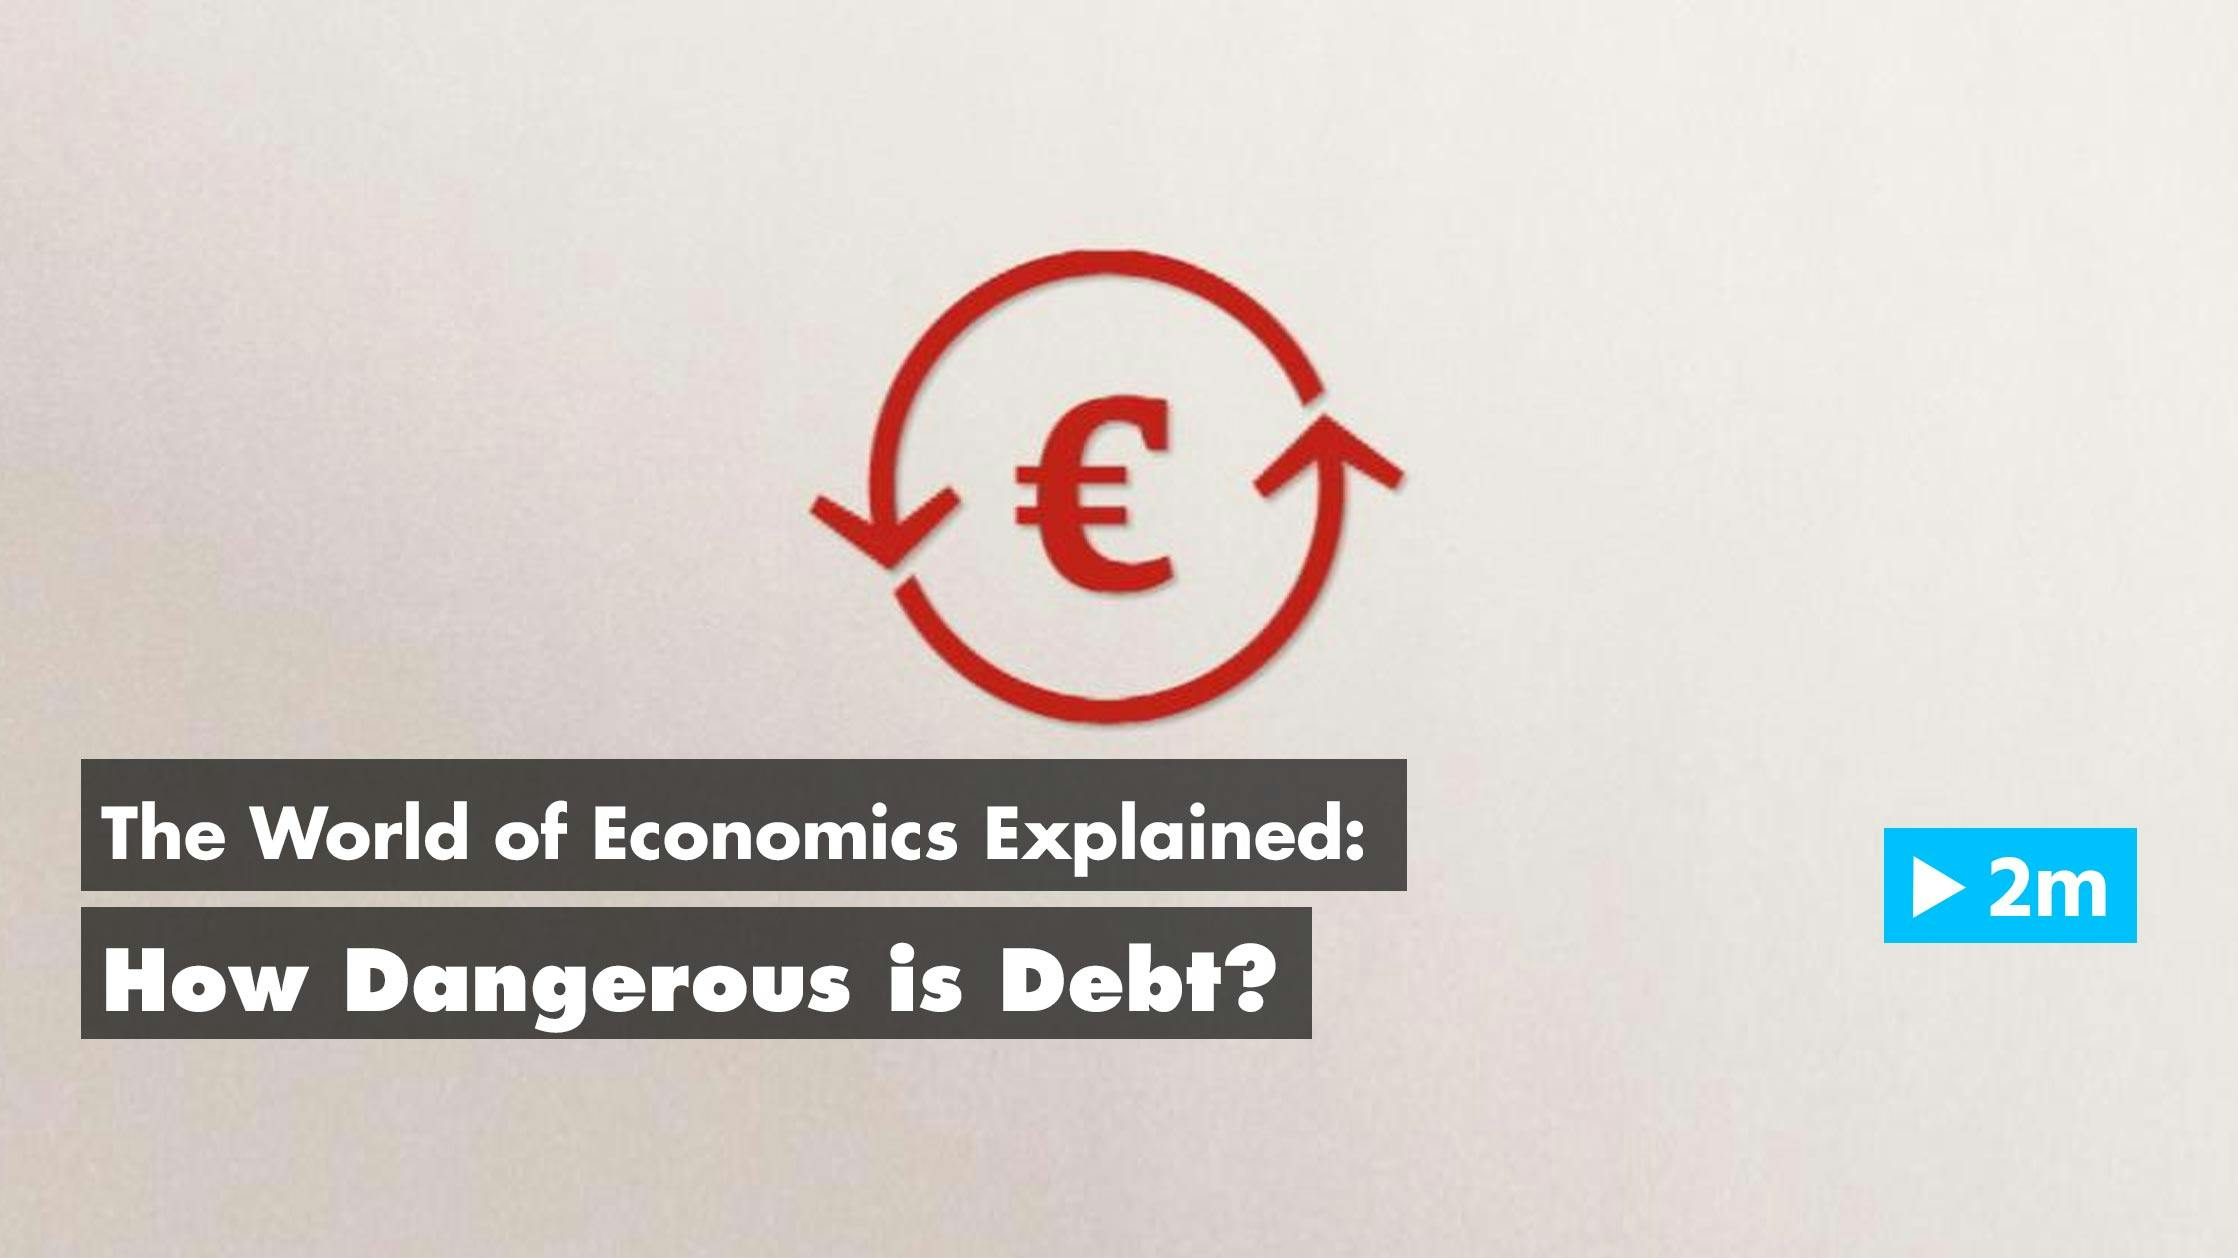 The World of Economics Explained: How dangerous is debt?